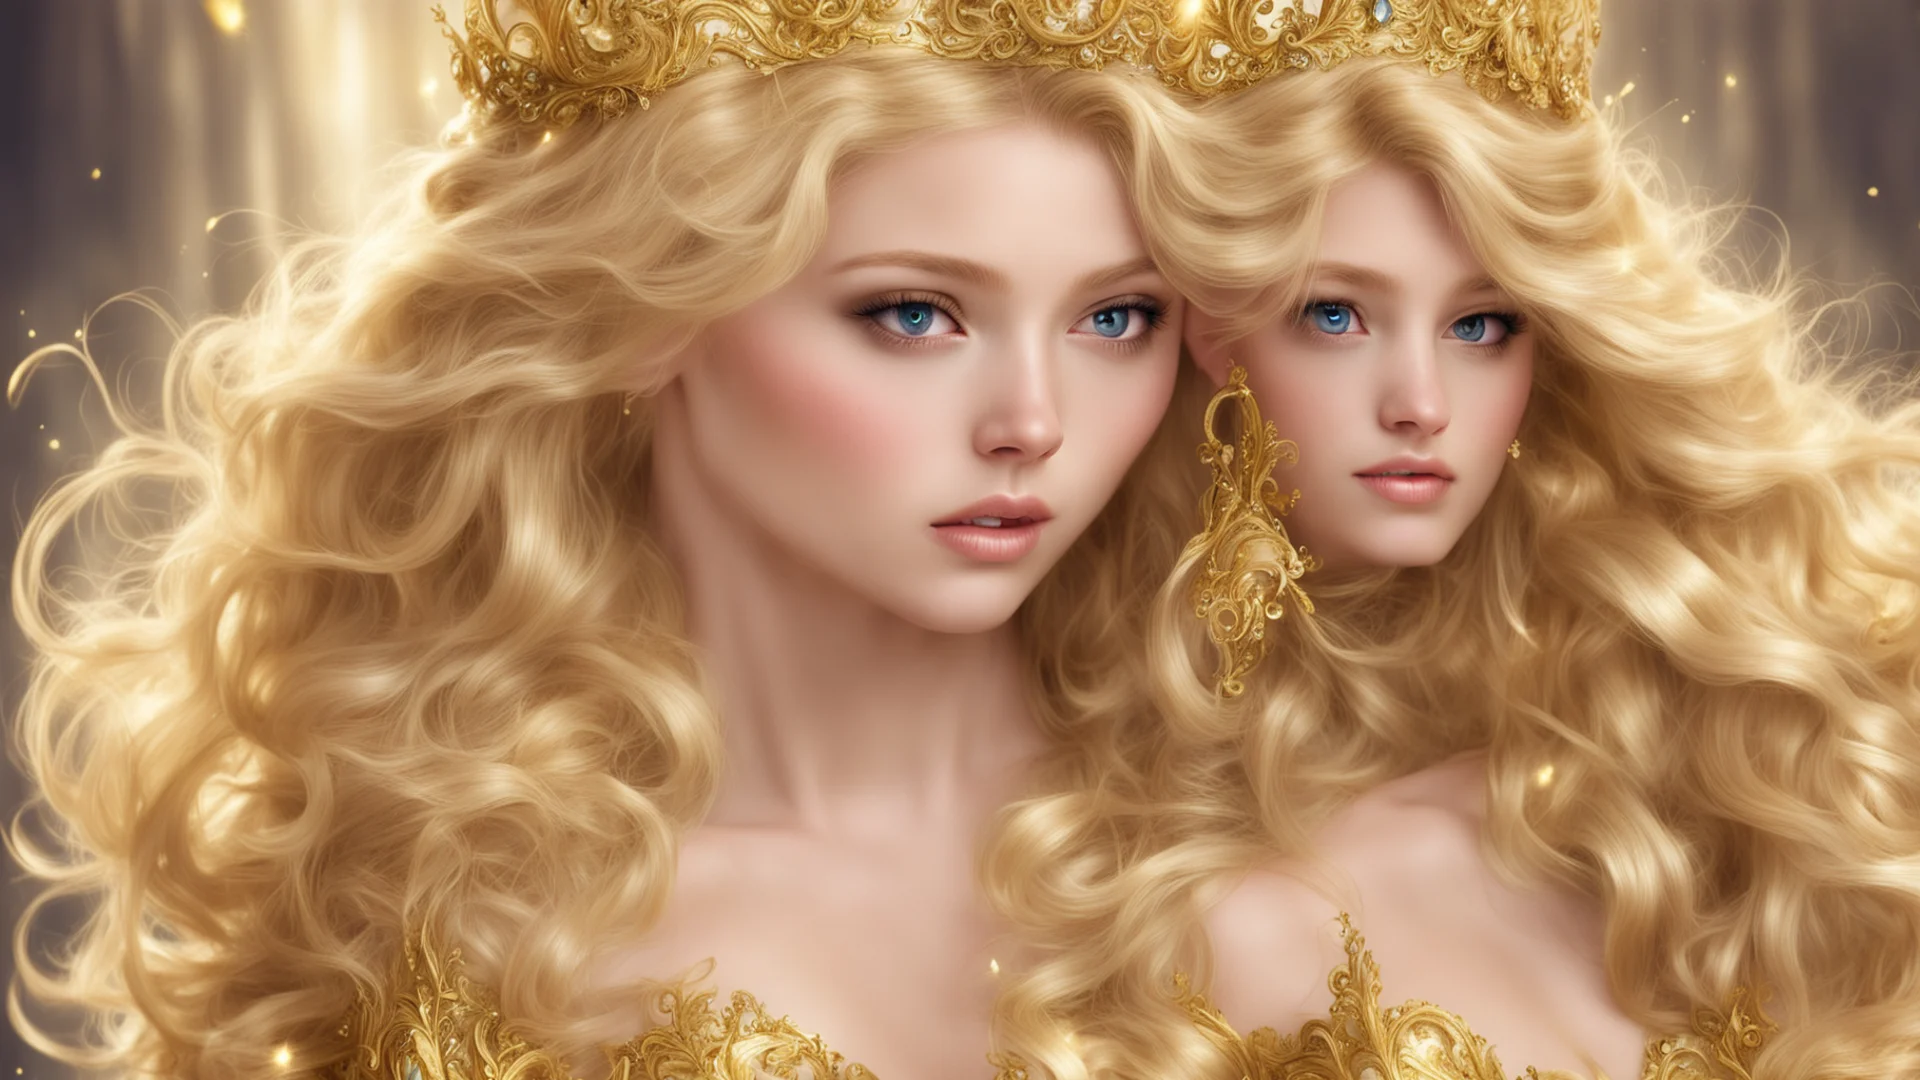 princess golden blonde fantasy art good looking trending fantastic 1 wide